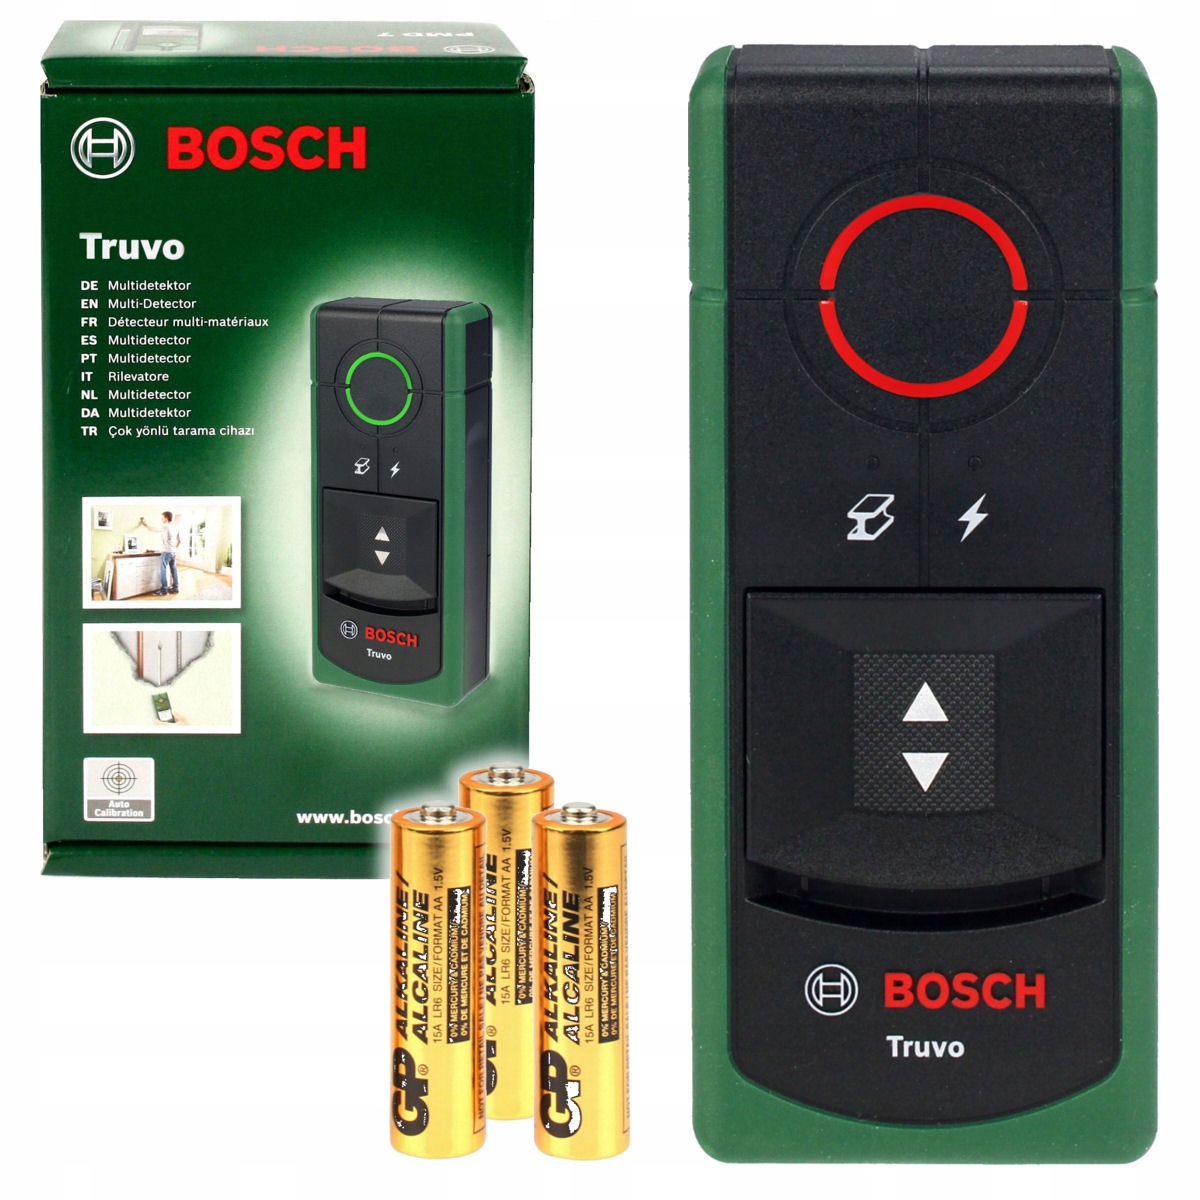 Detektor Bosch - Niska cena na